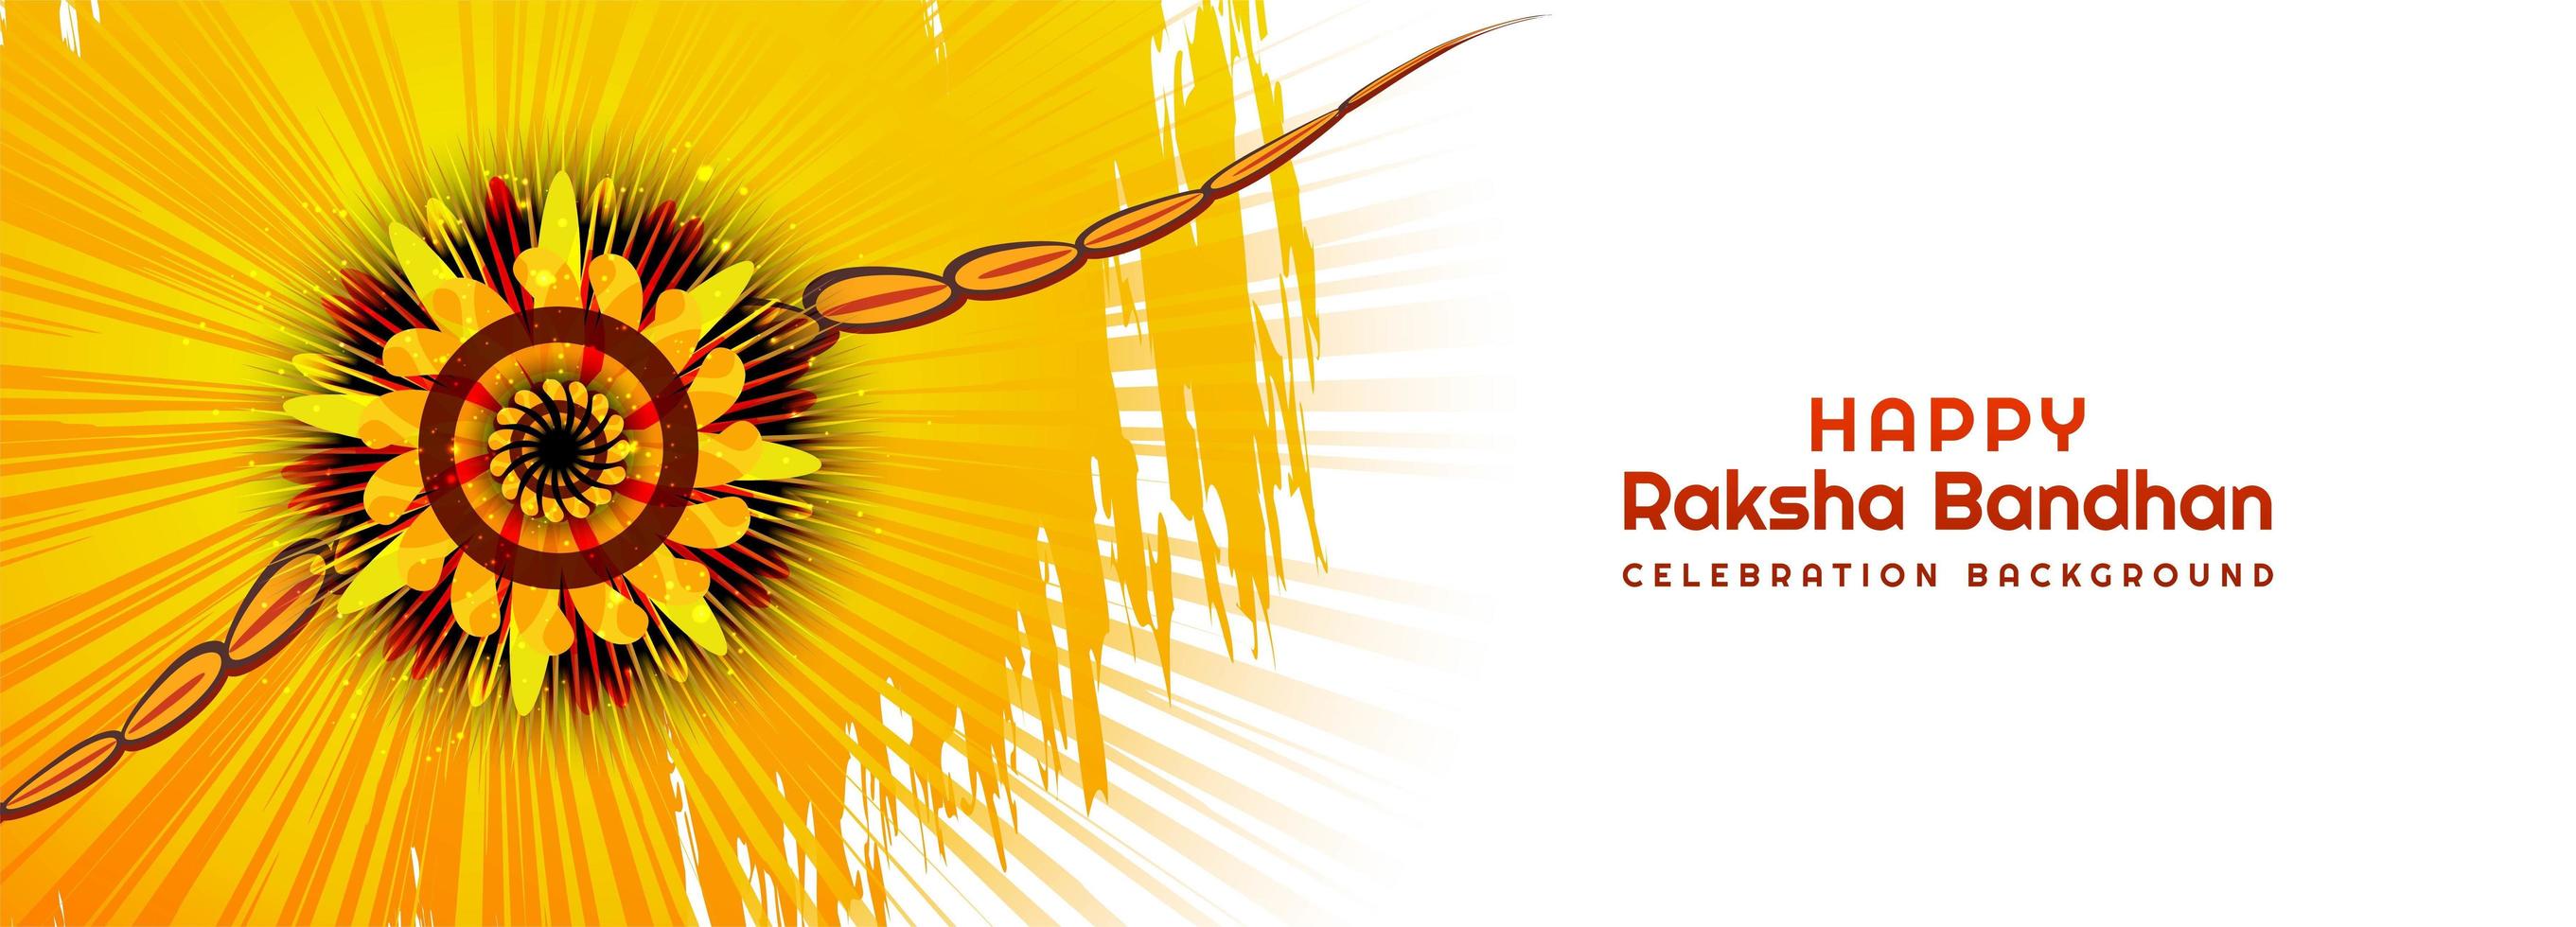 Hindu Festival Raksha Bandhan Banner Design vector